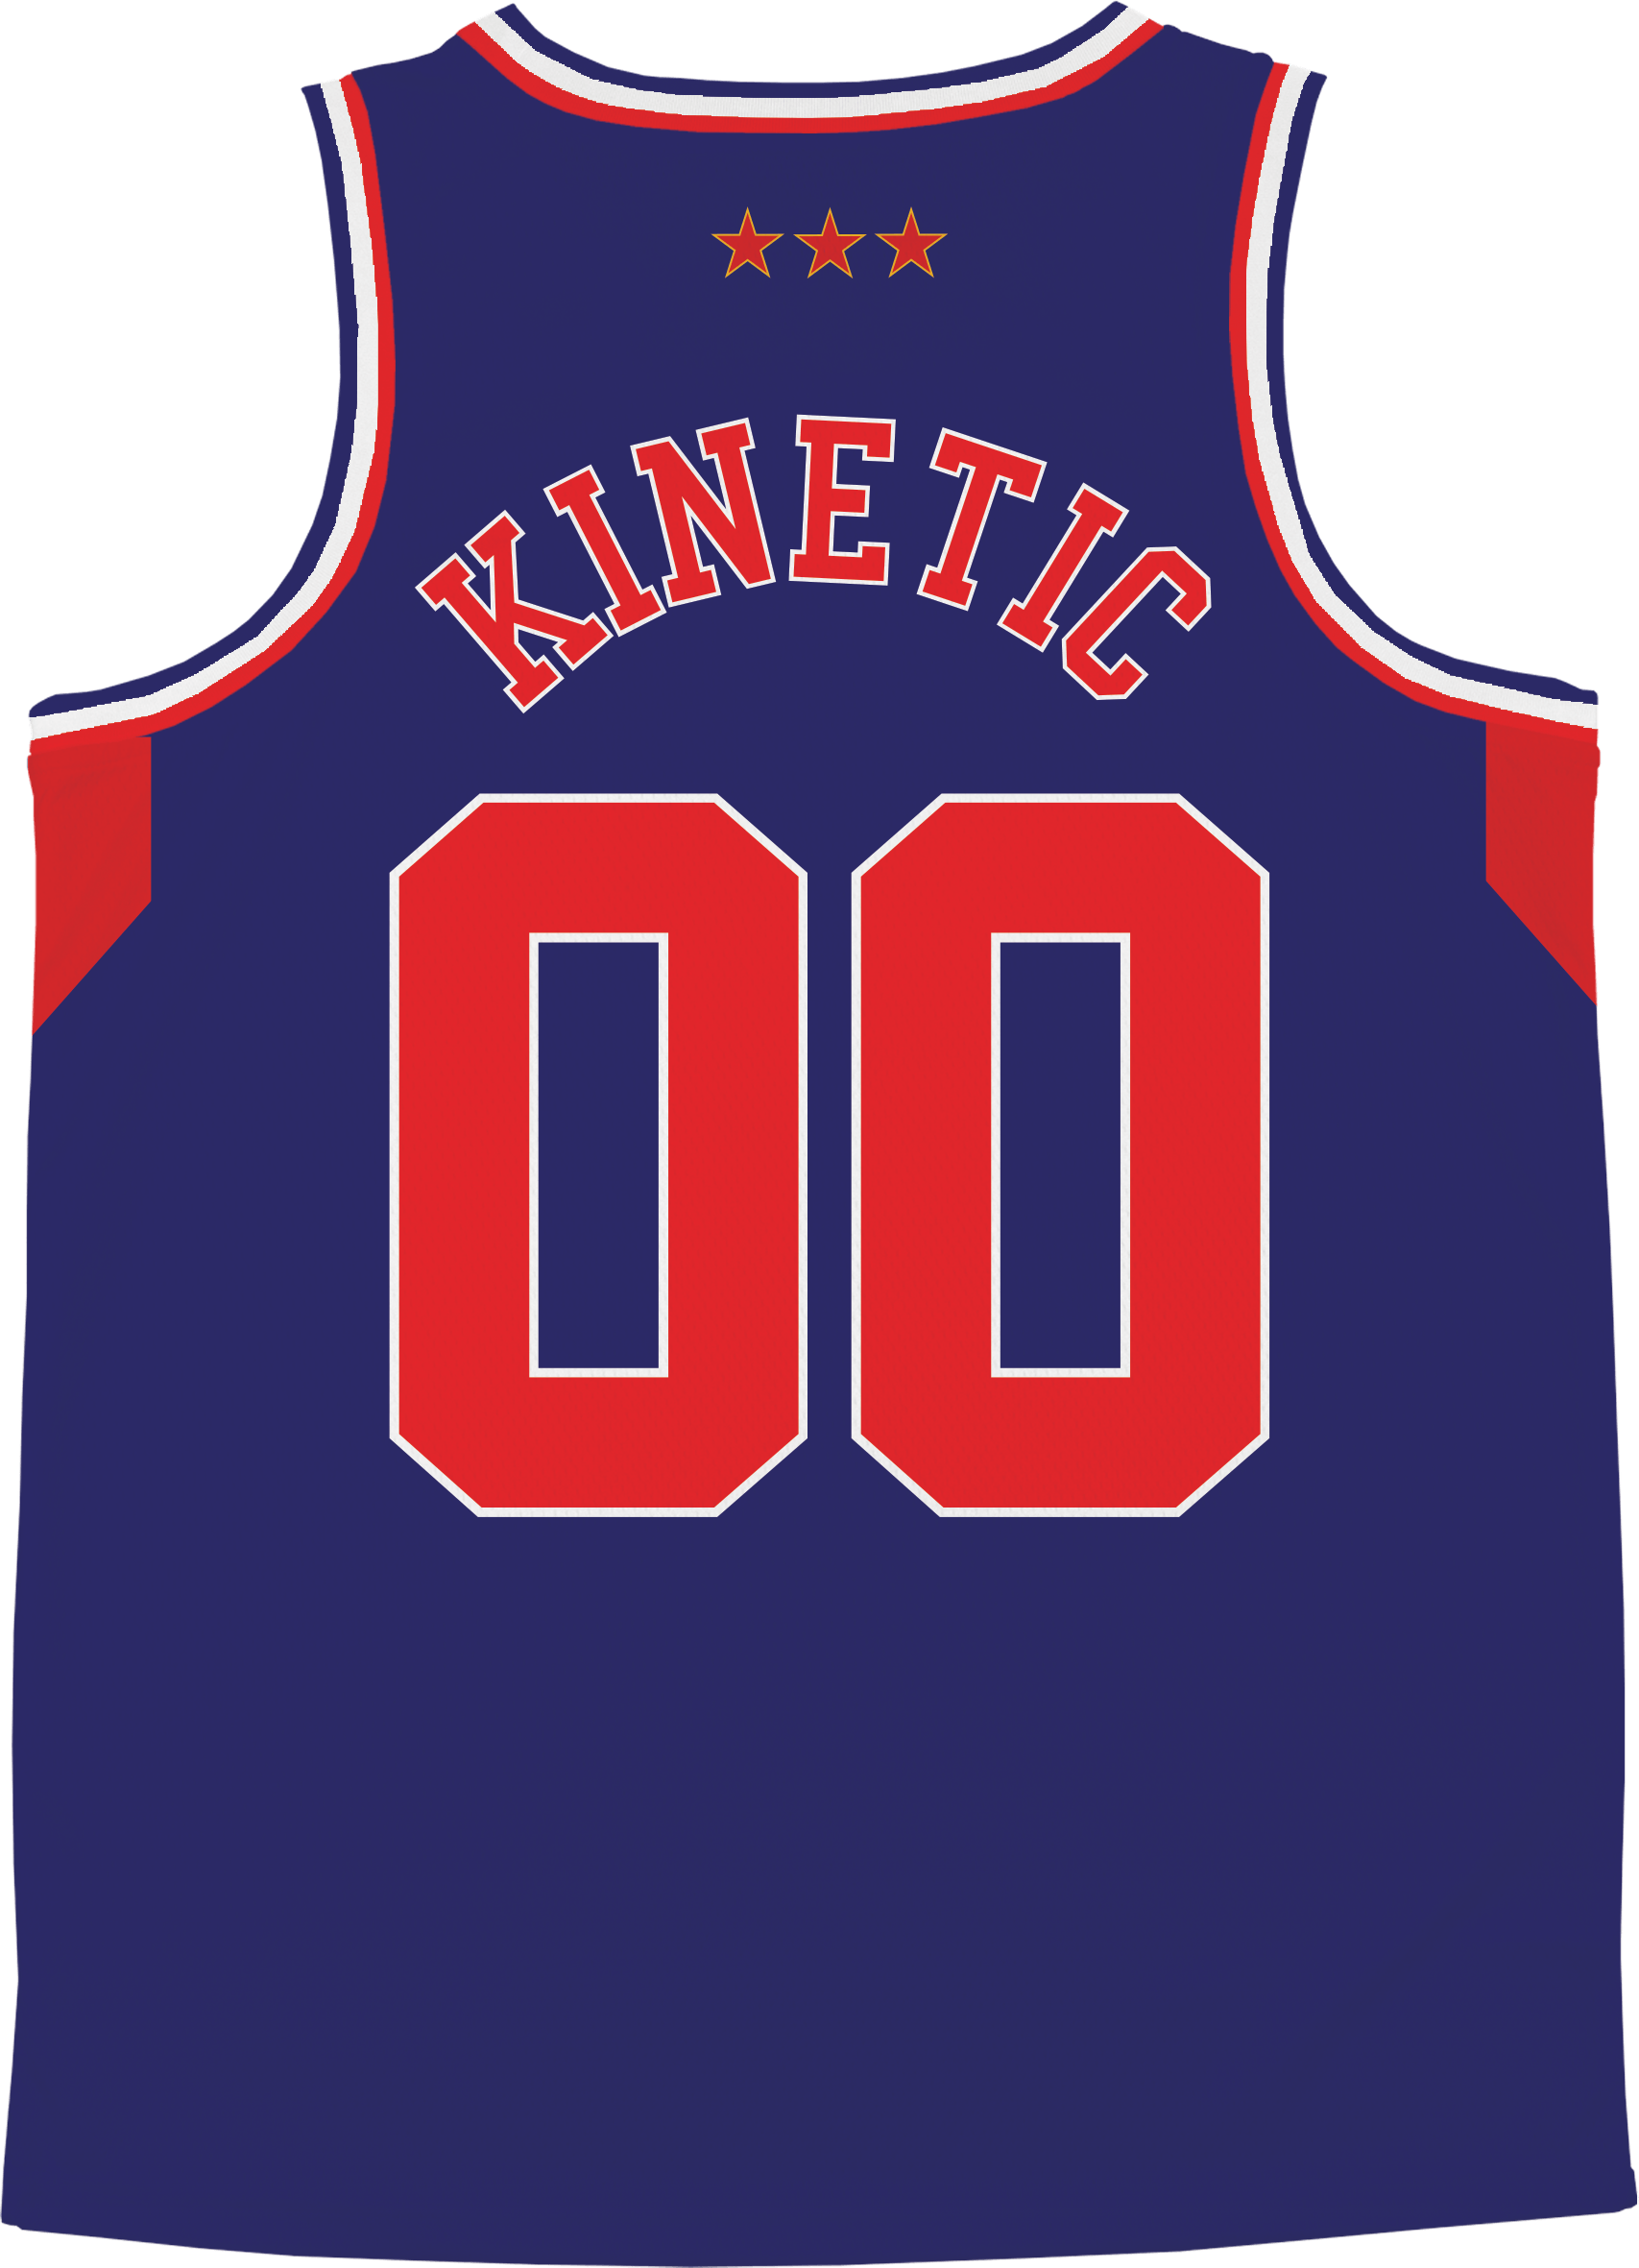 Acacia - Retro Ballers Basketball Jersey - Kinetic Society